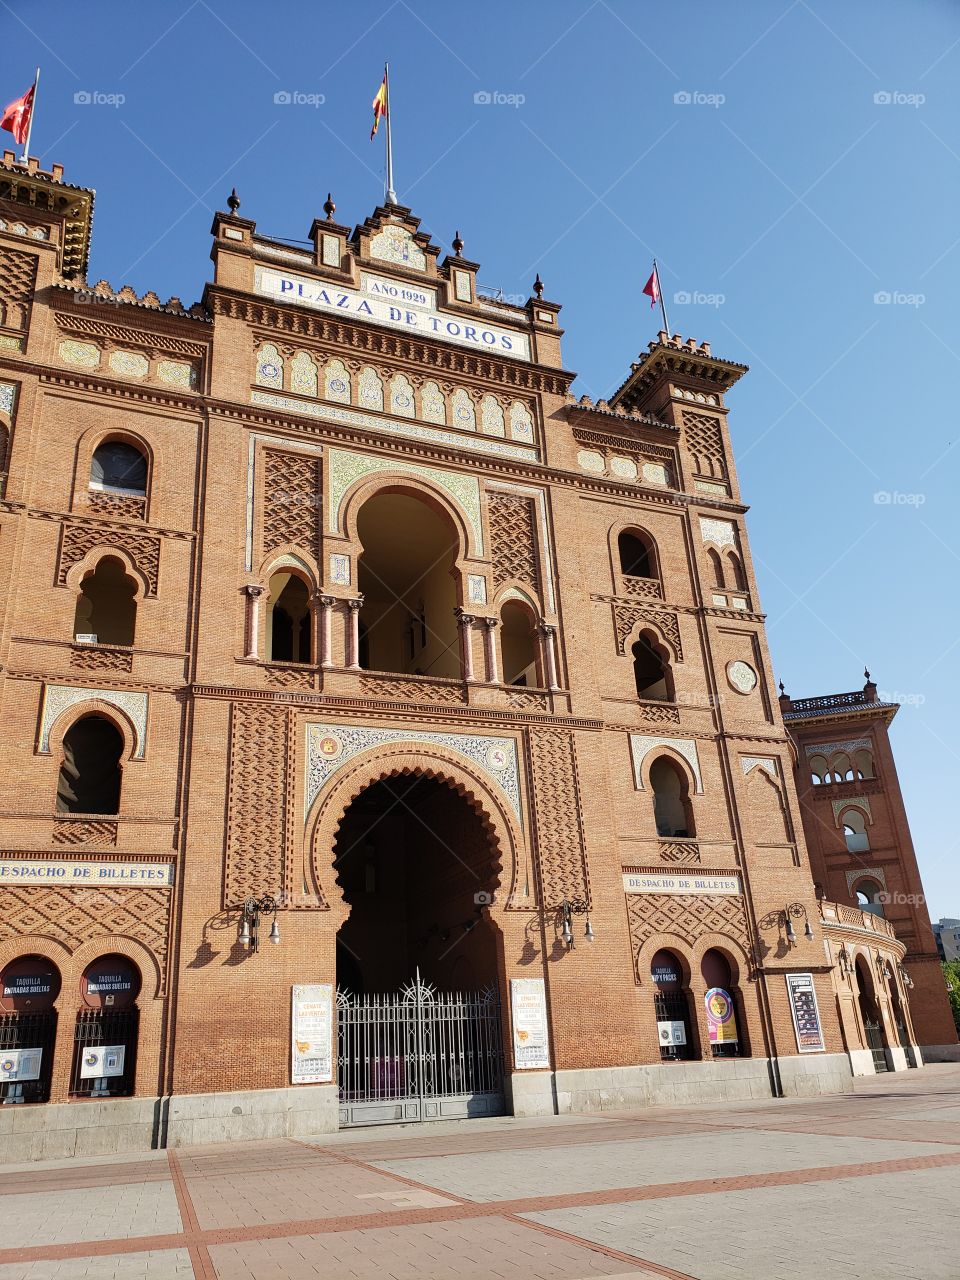 primer plano de la entrada de la plaza de toros de Madrid